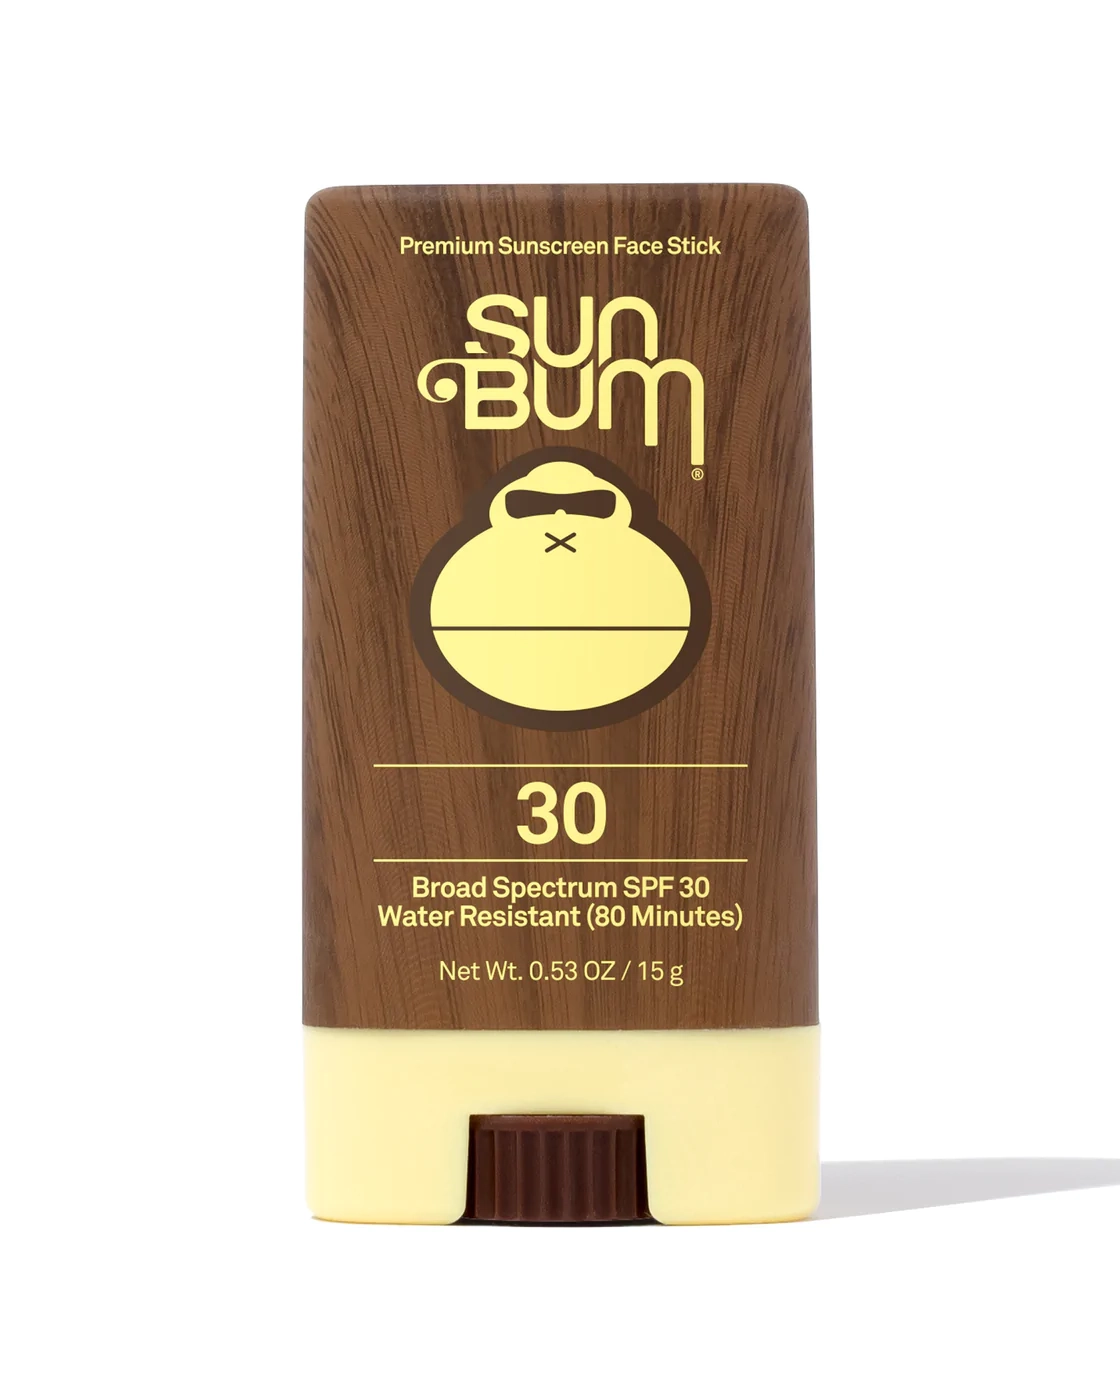 Sun Bum Original SPF 30 Suncreen Face Stick